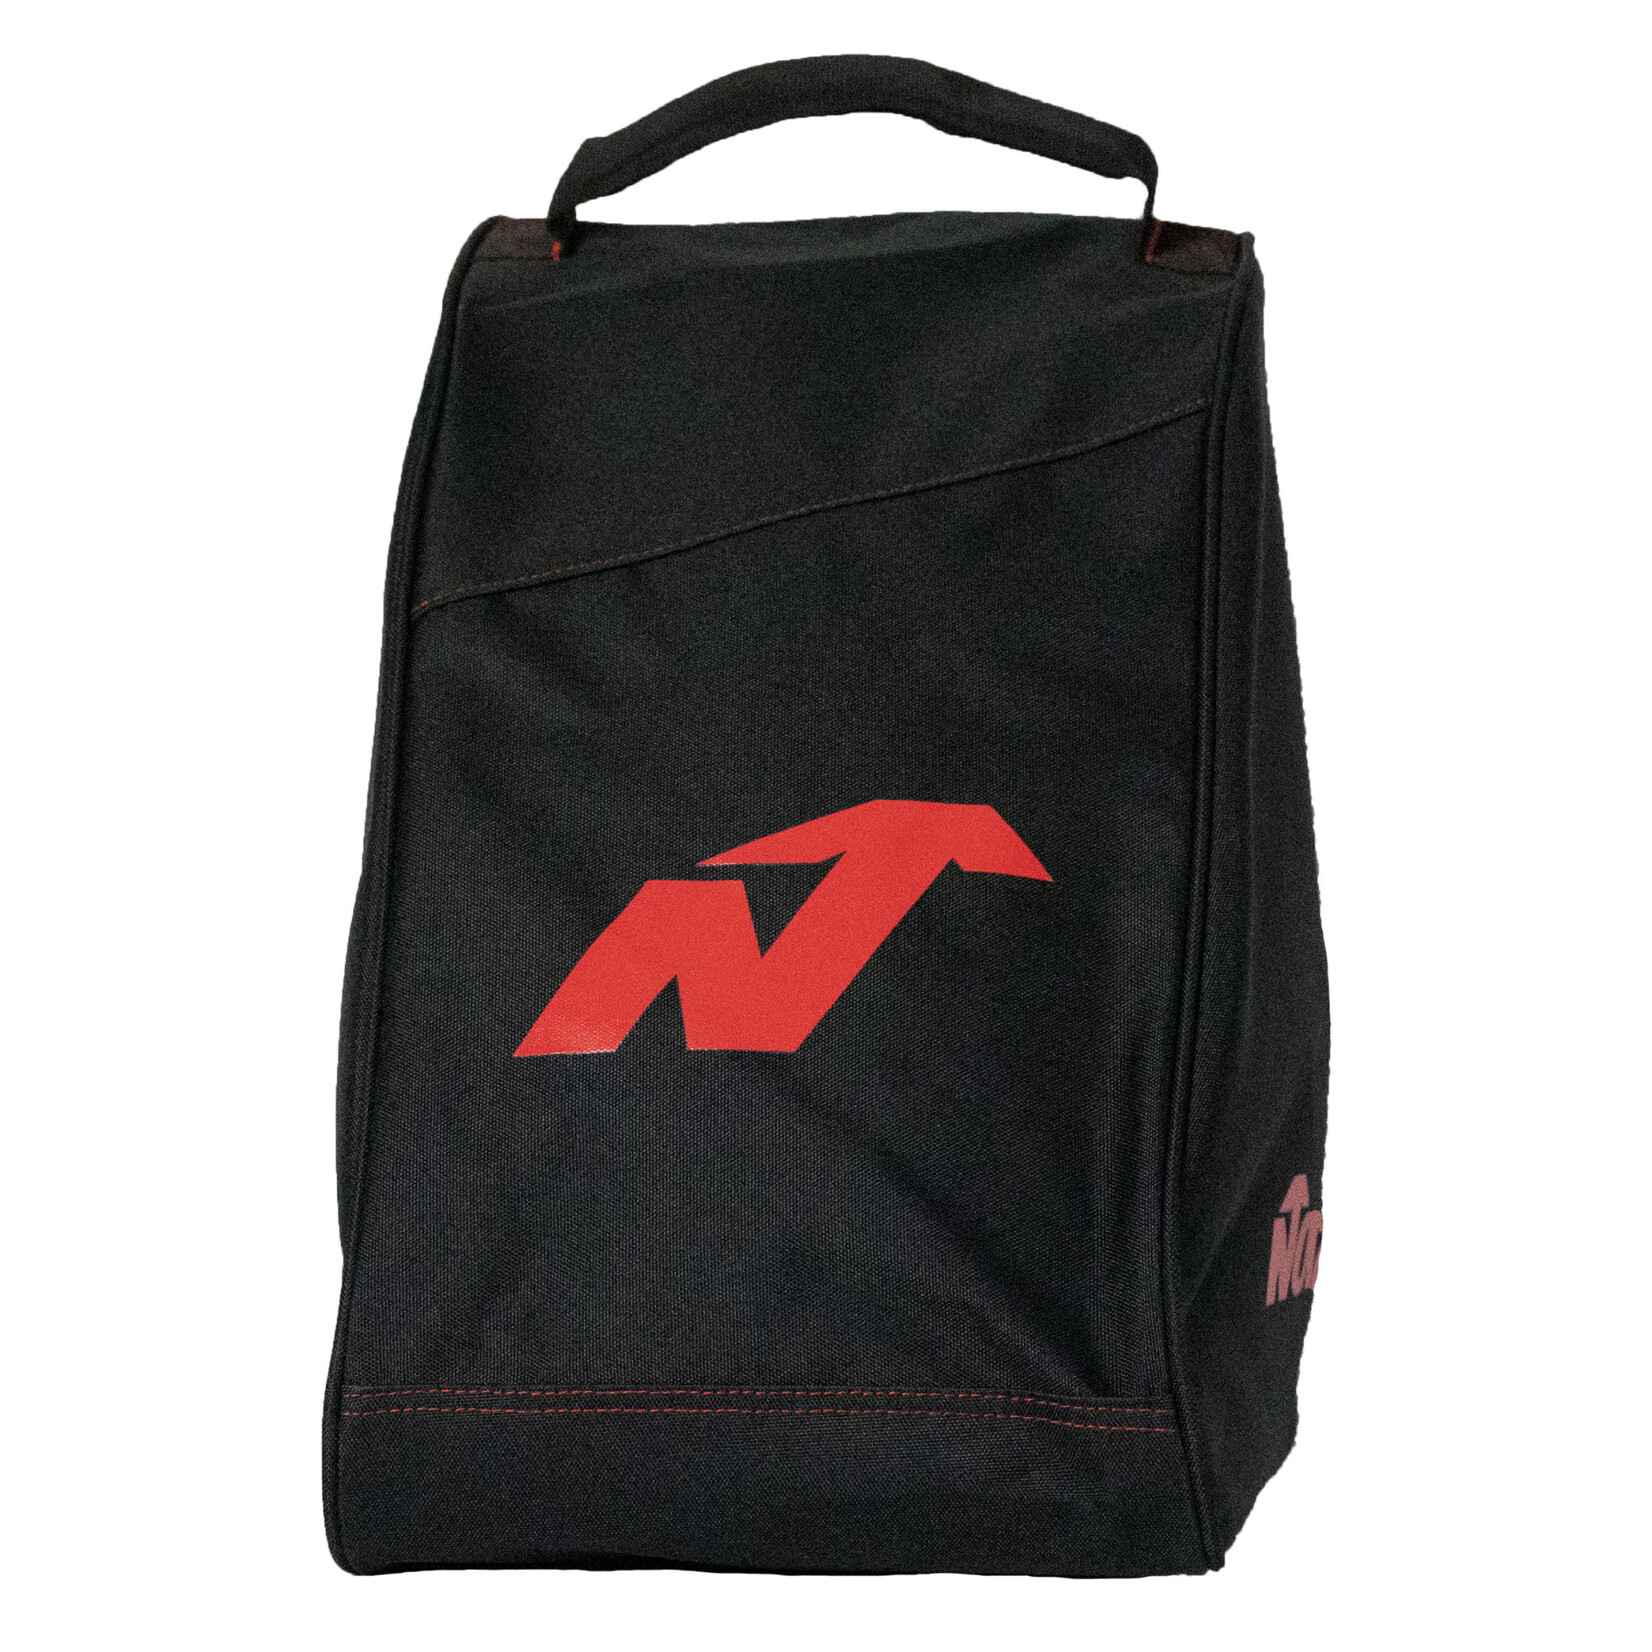 Nordica ECO BOOT BAG BLACK/RED